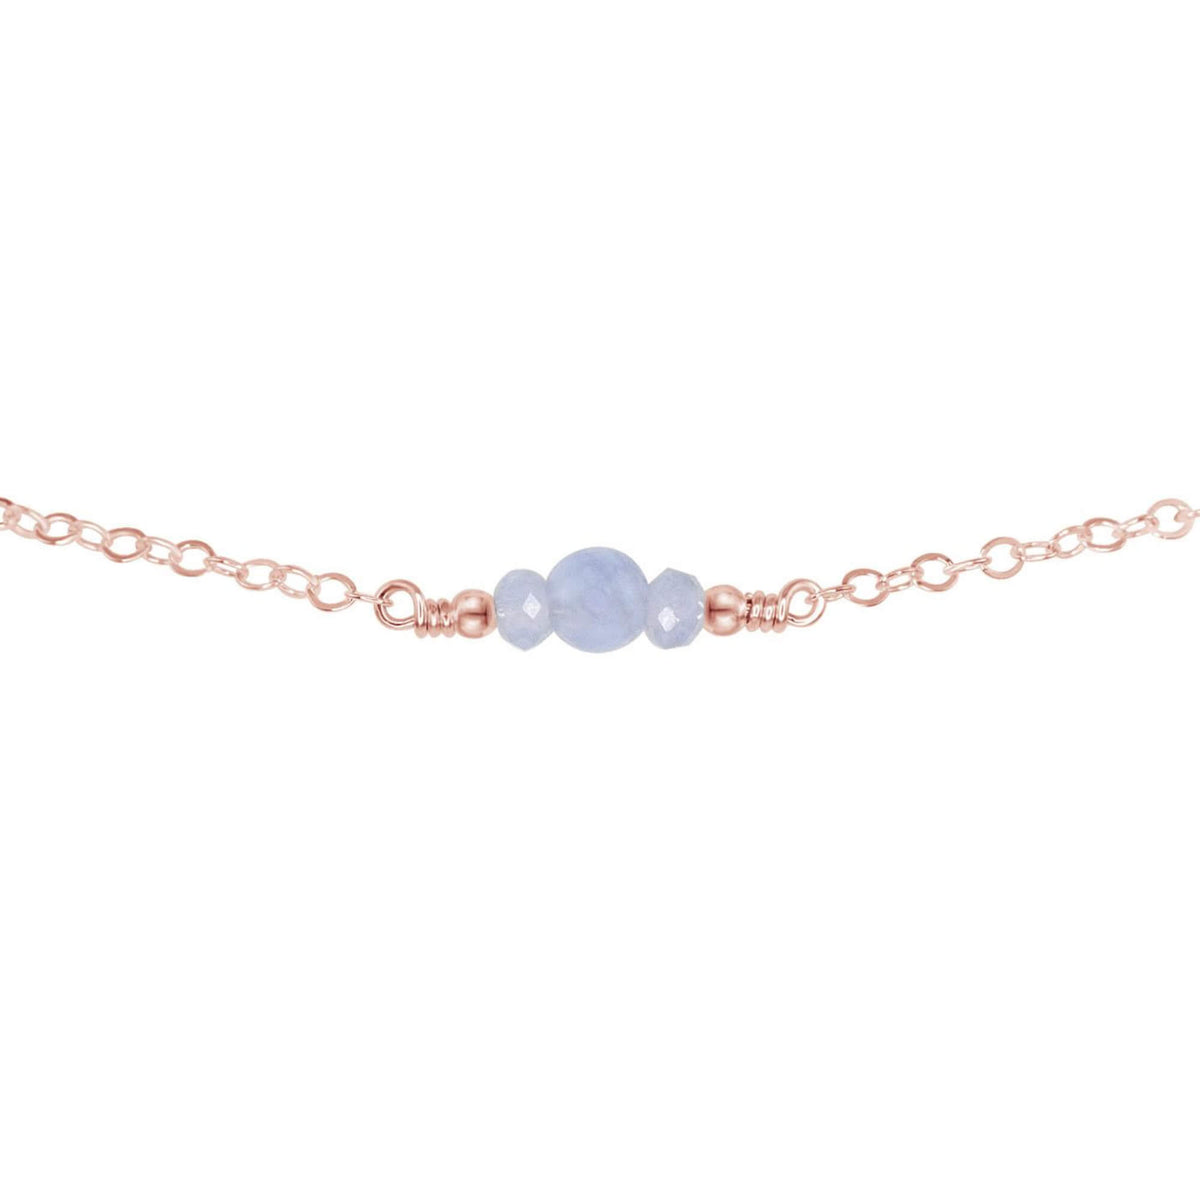 Dainty Choker - Blue Lace Agate - 14K Rose Gold Fill - Luna Tide Handmade Jewellery